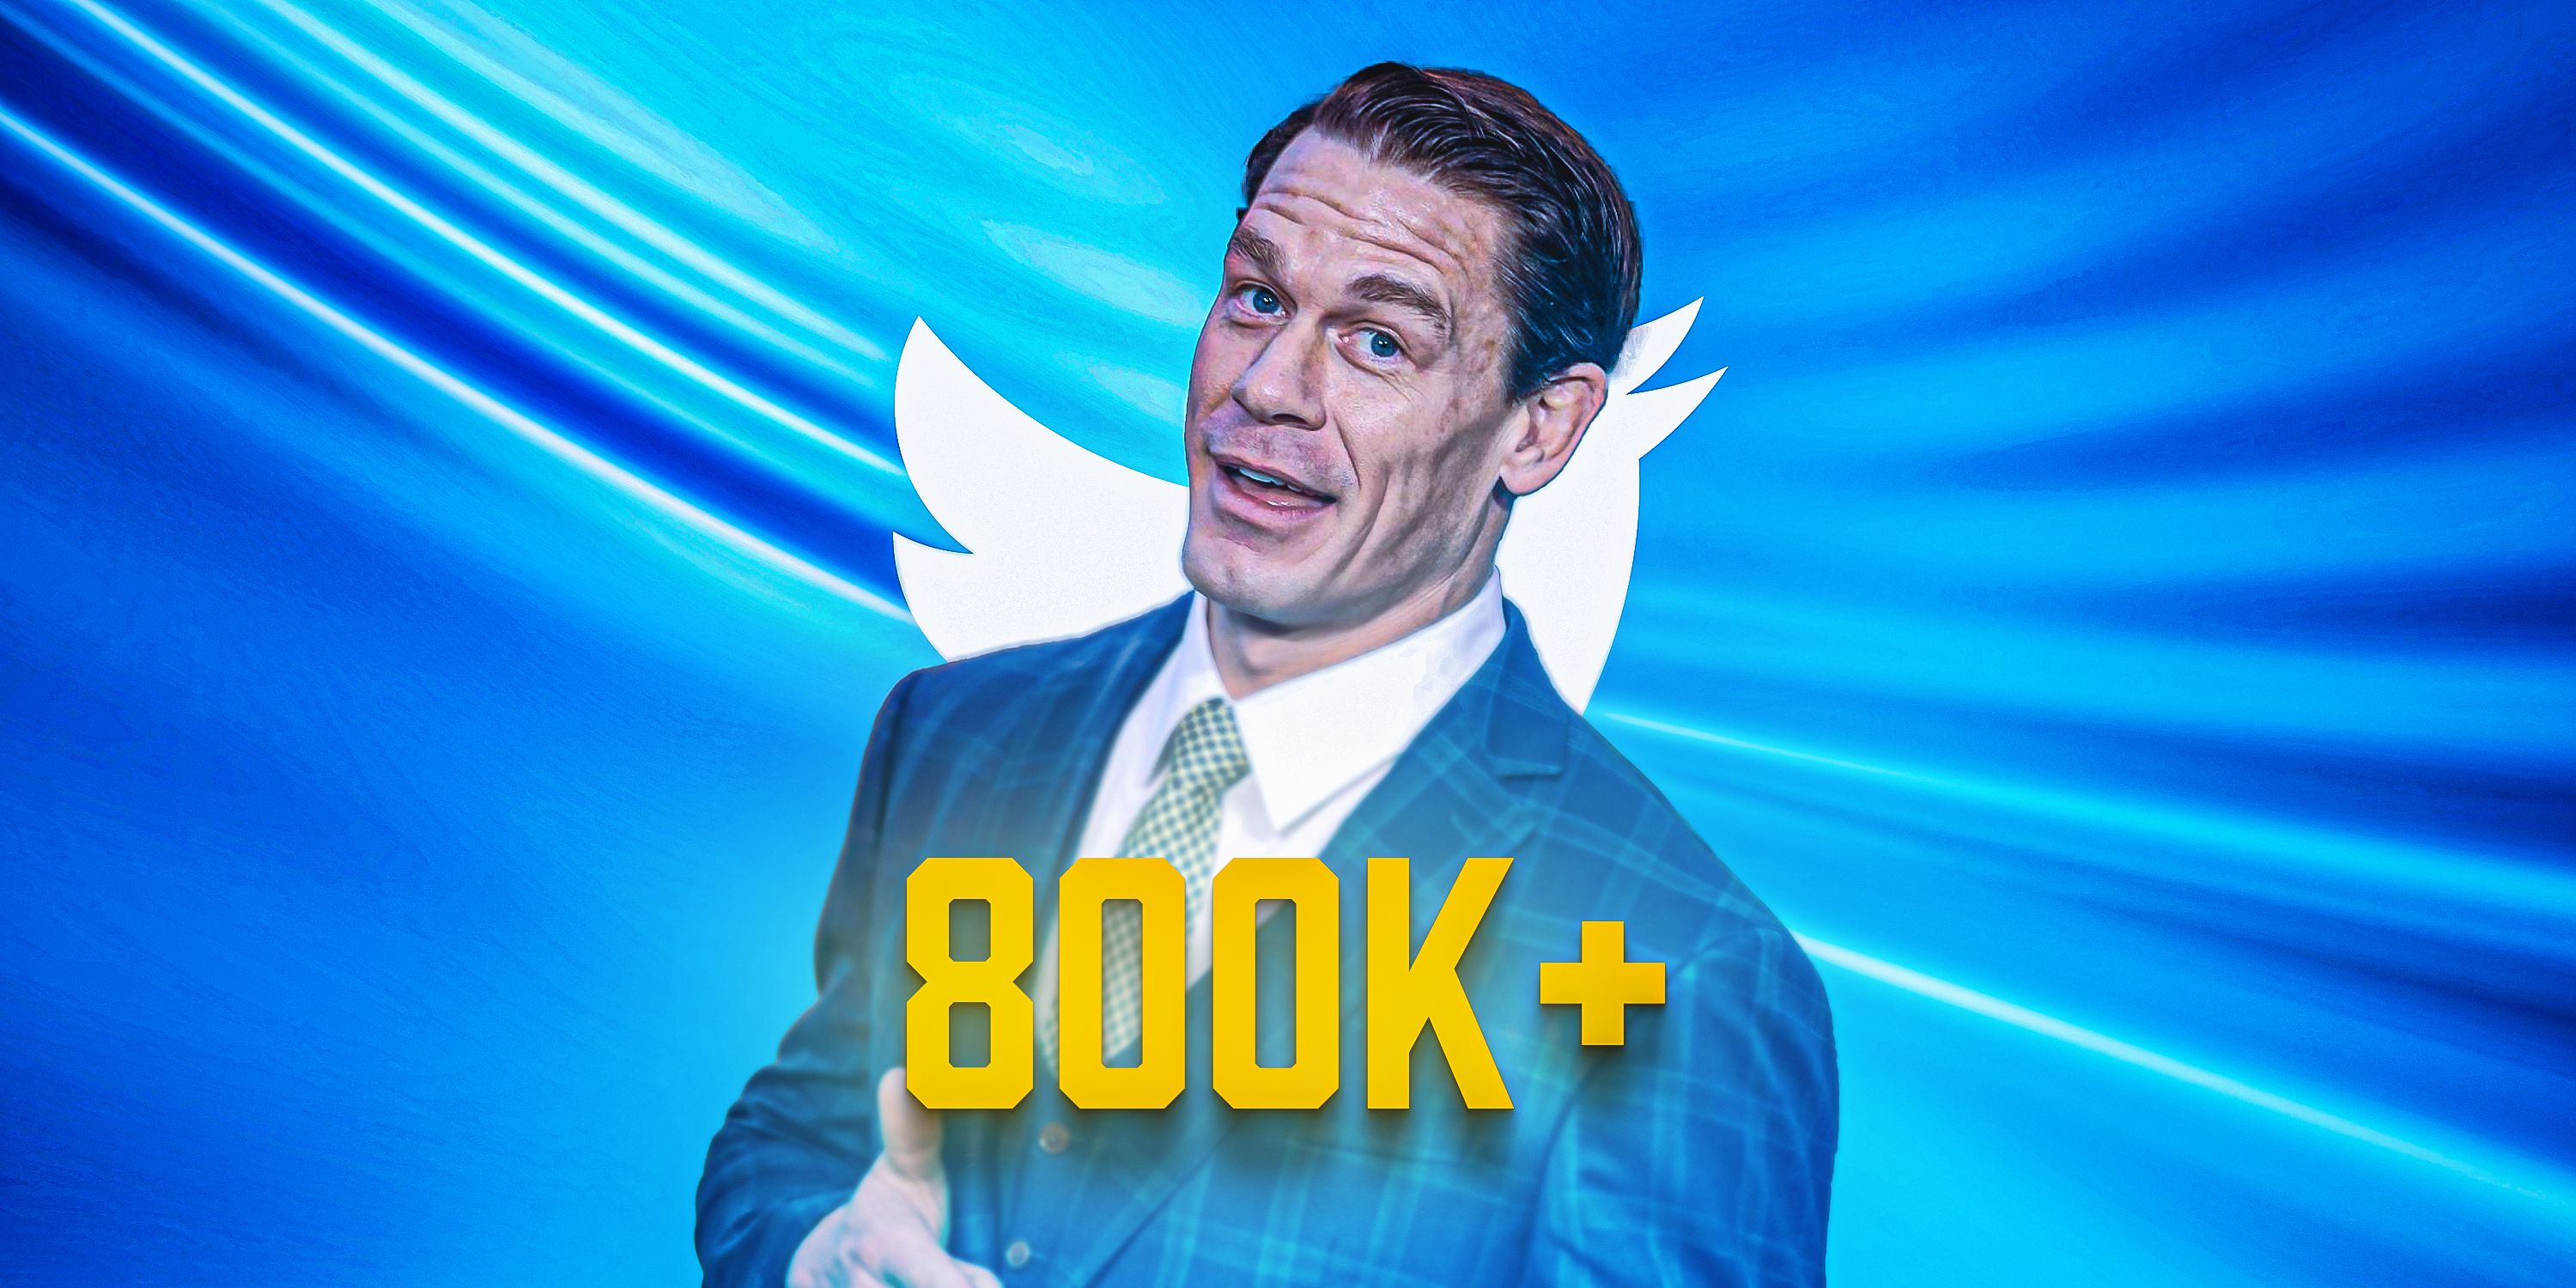 Why John Cena Follows Over 800,000 People on Twitter